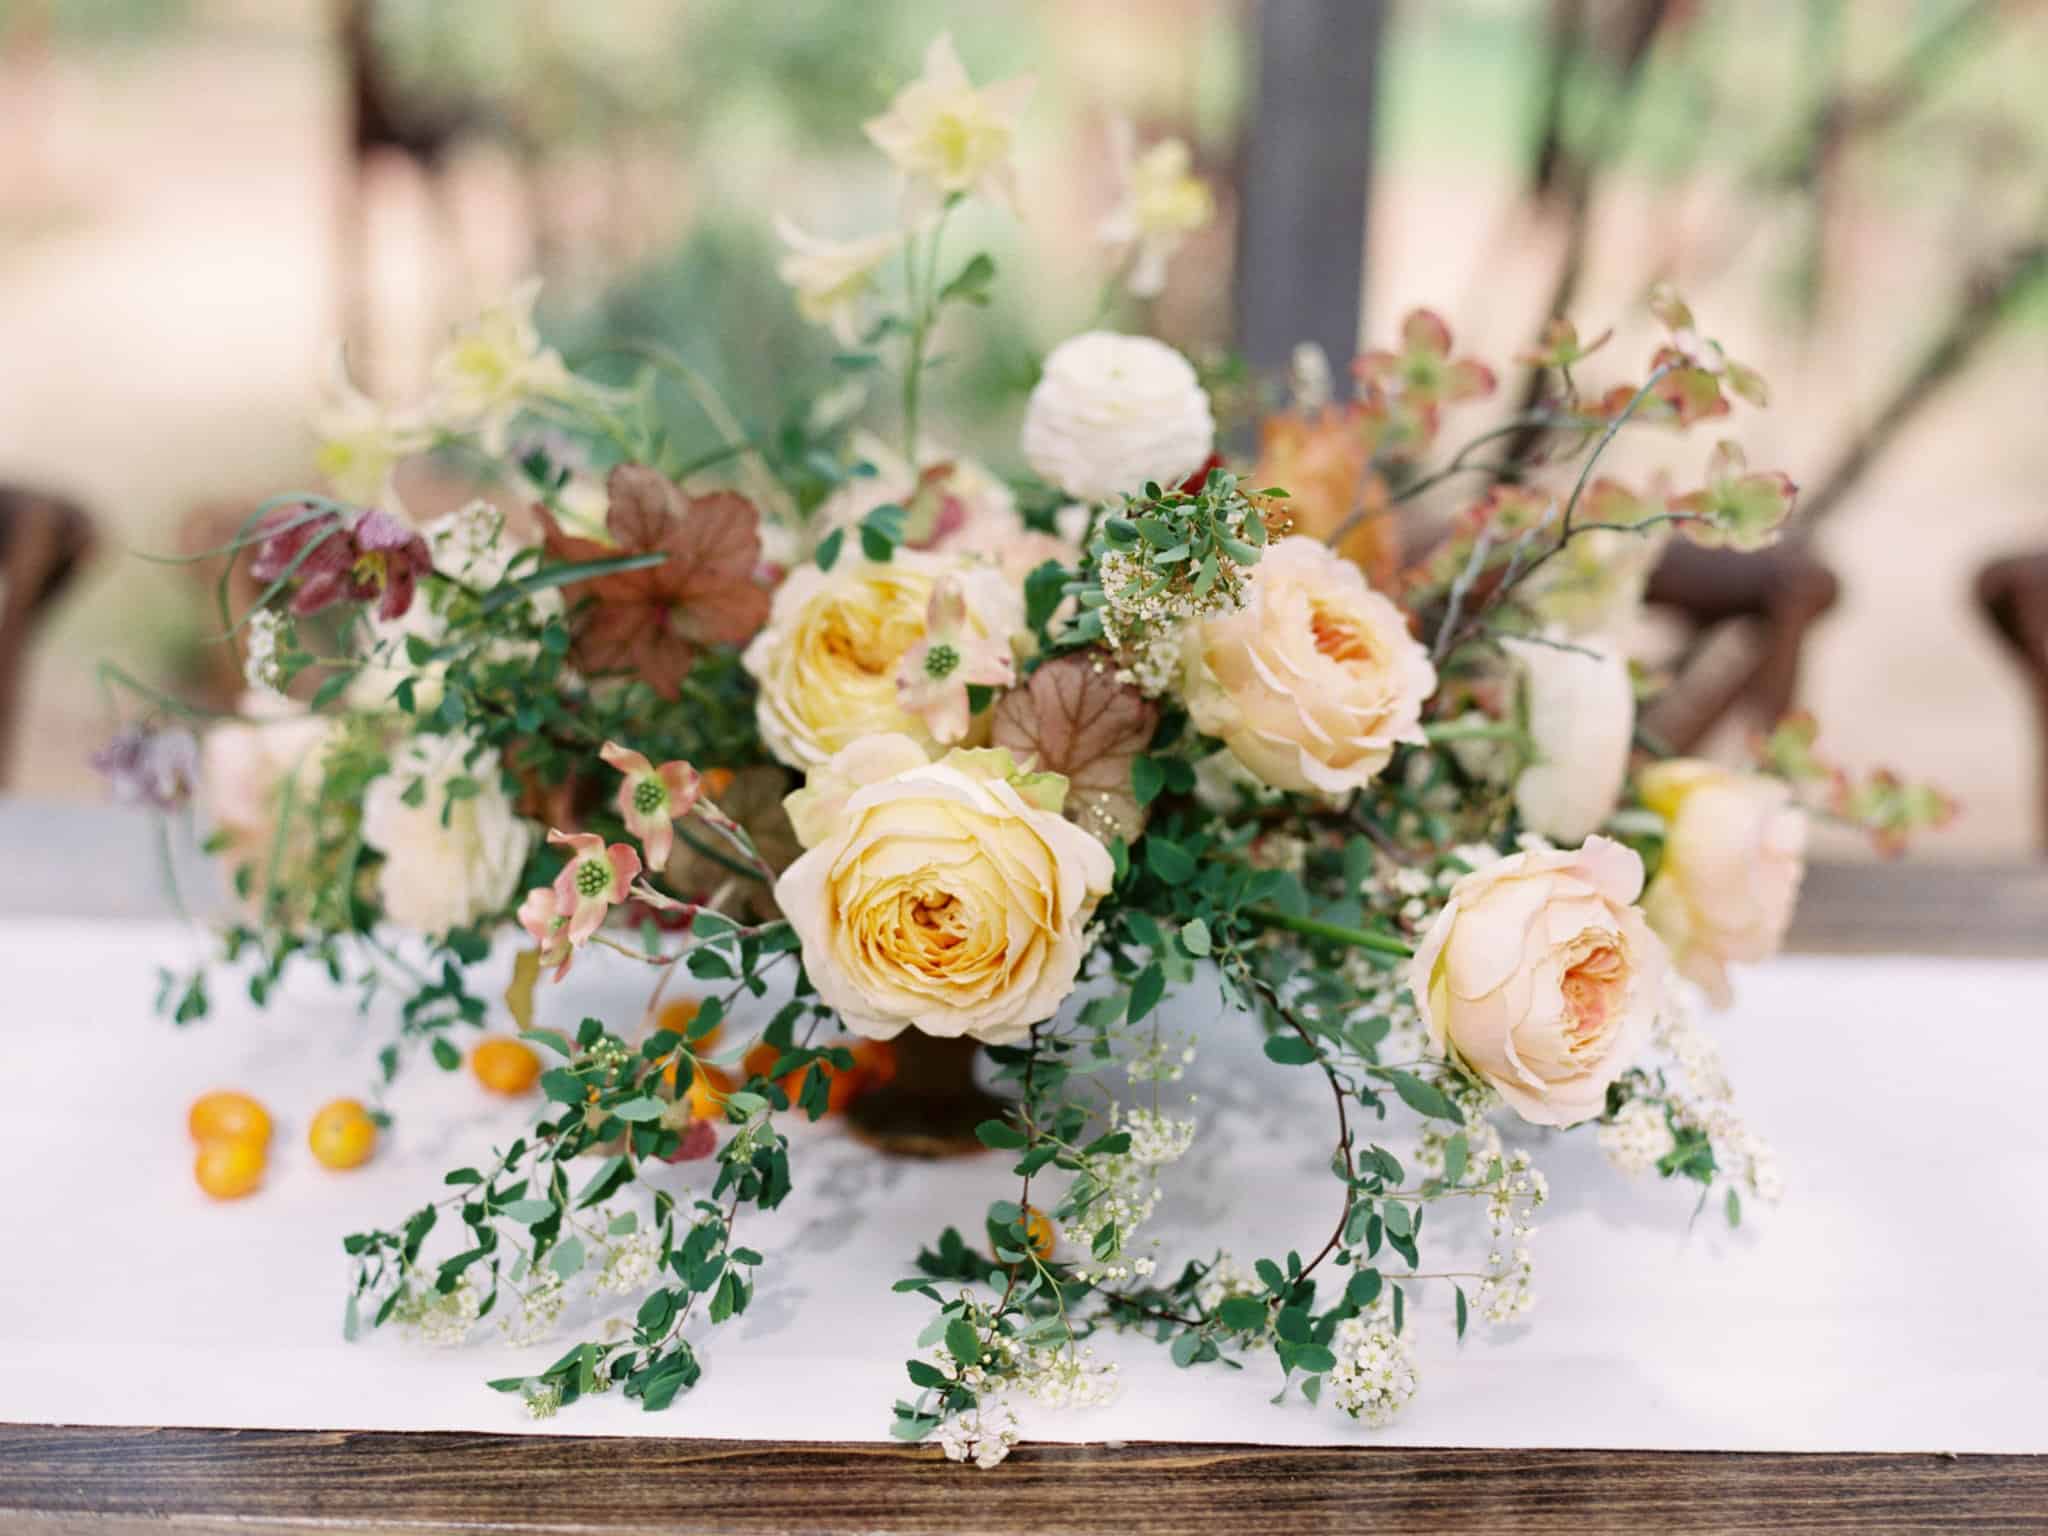 earth tone floral arrangement at wedding reception